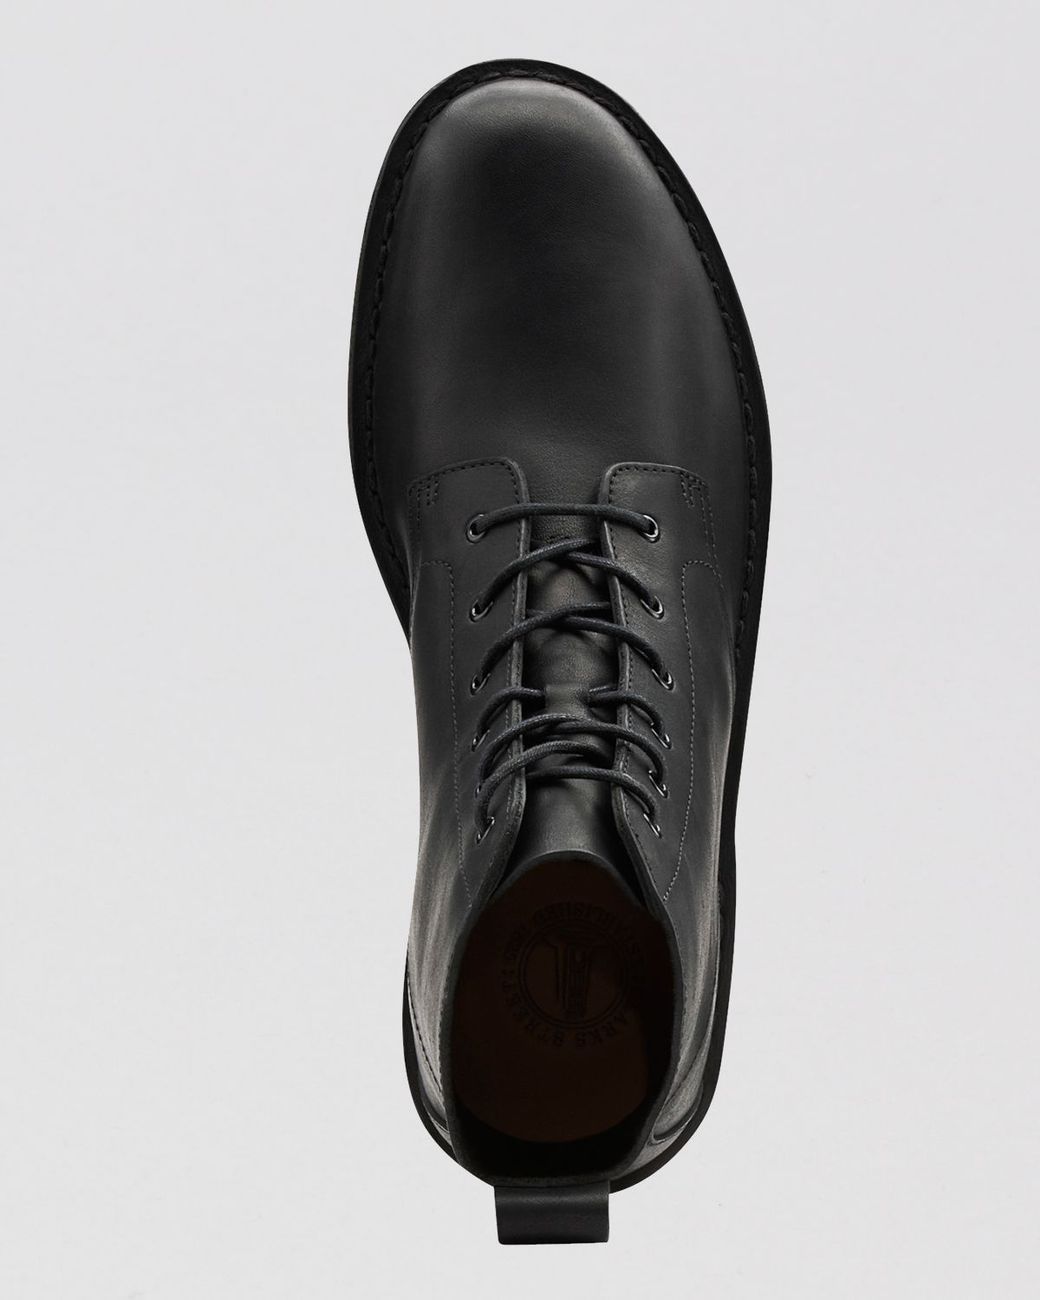 Clarks Desert Mali Leather Boots in Black for Men | Lyst